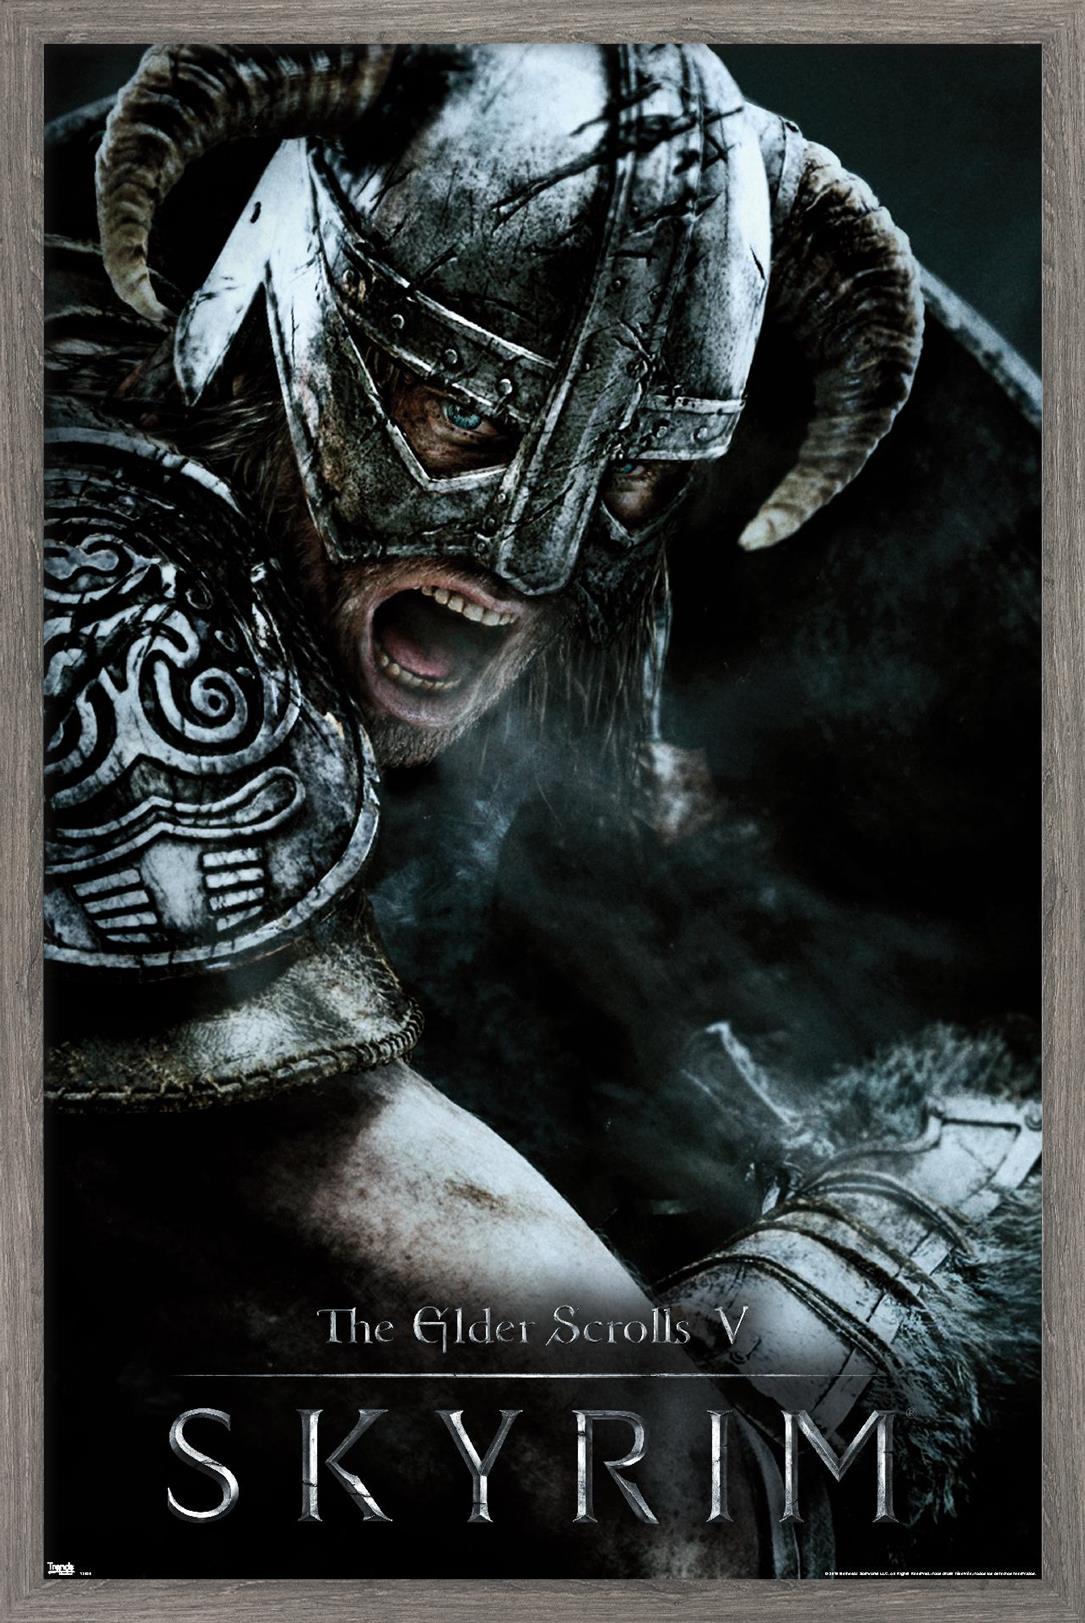 The Elder Scrolls V: Skyrim - Aerial Wall Poster, 22.375" x 34" Framed - image 1 of 5